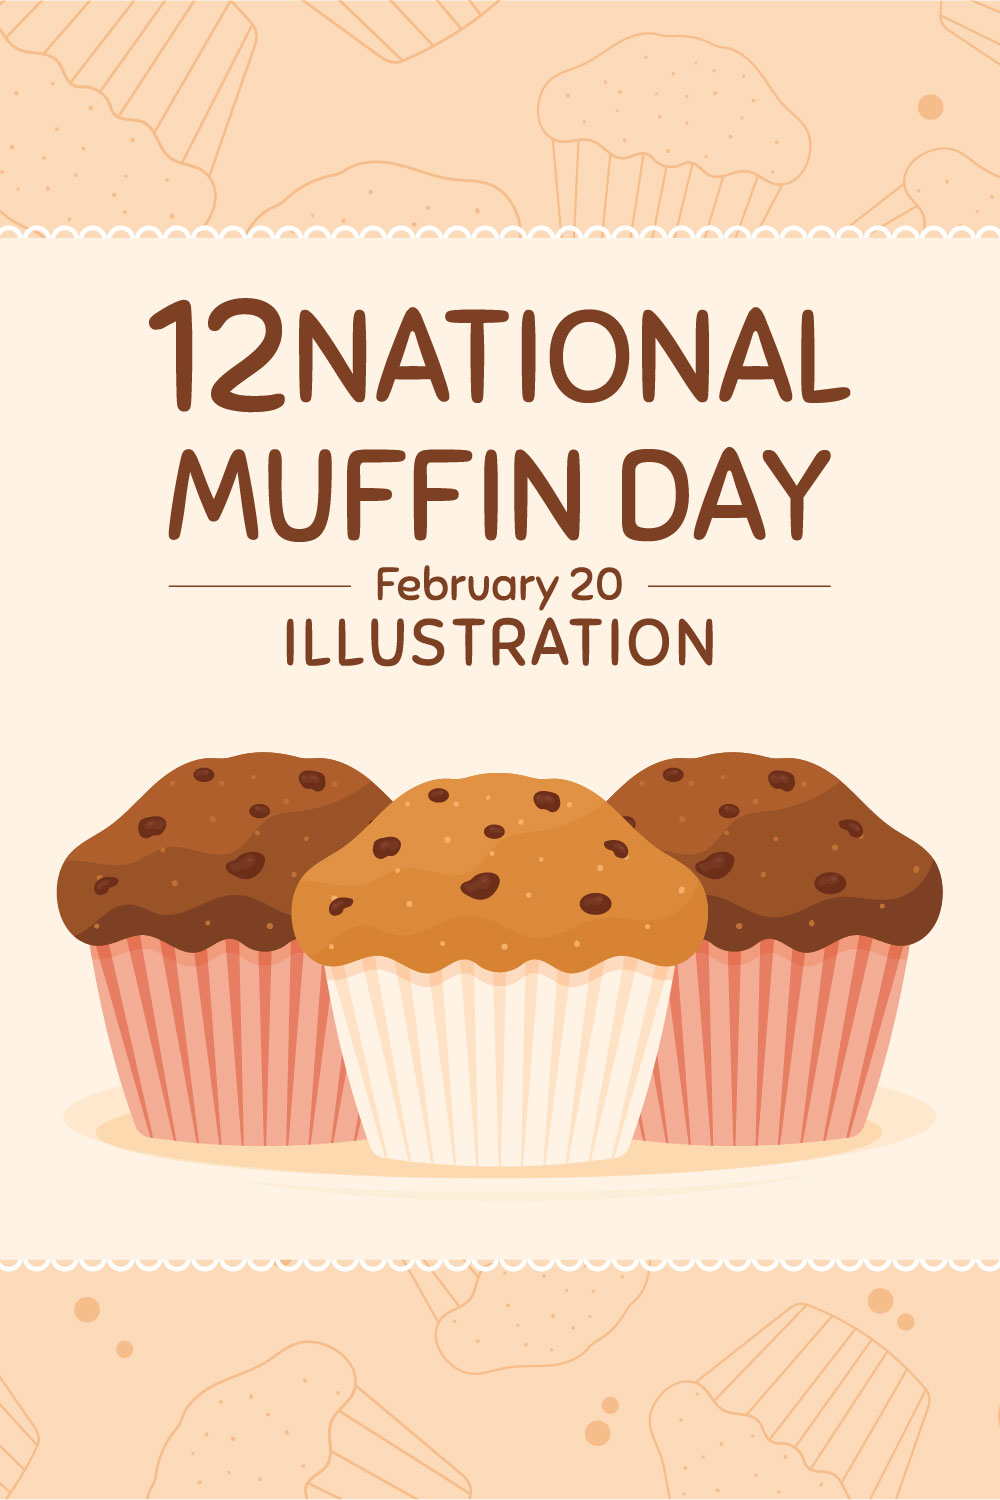 National Muffin Day Illustration pinterest image.